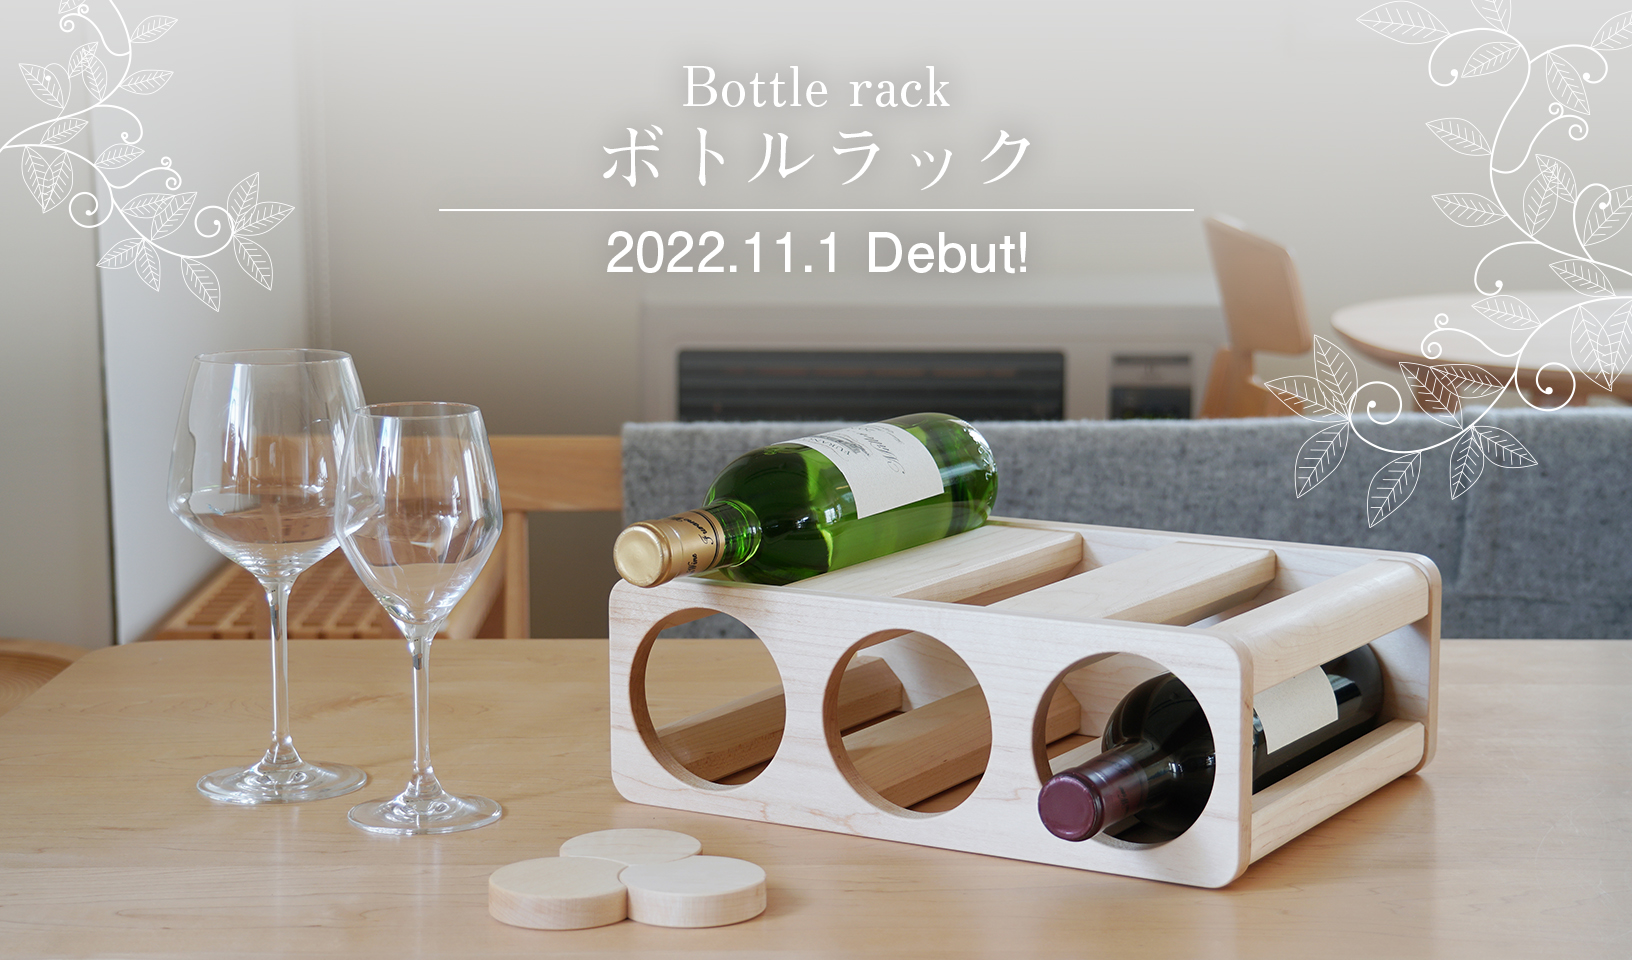 Gift Limited Edition / ボトルラック Bottle rack - 2022.11.1 Debut 